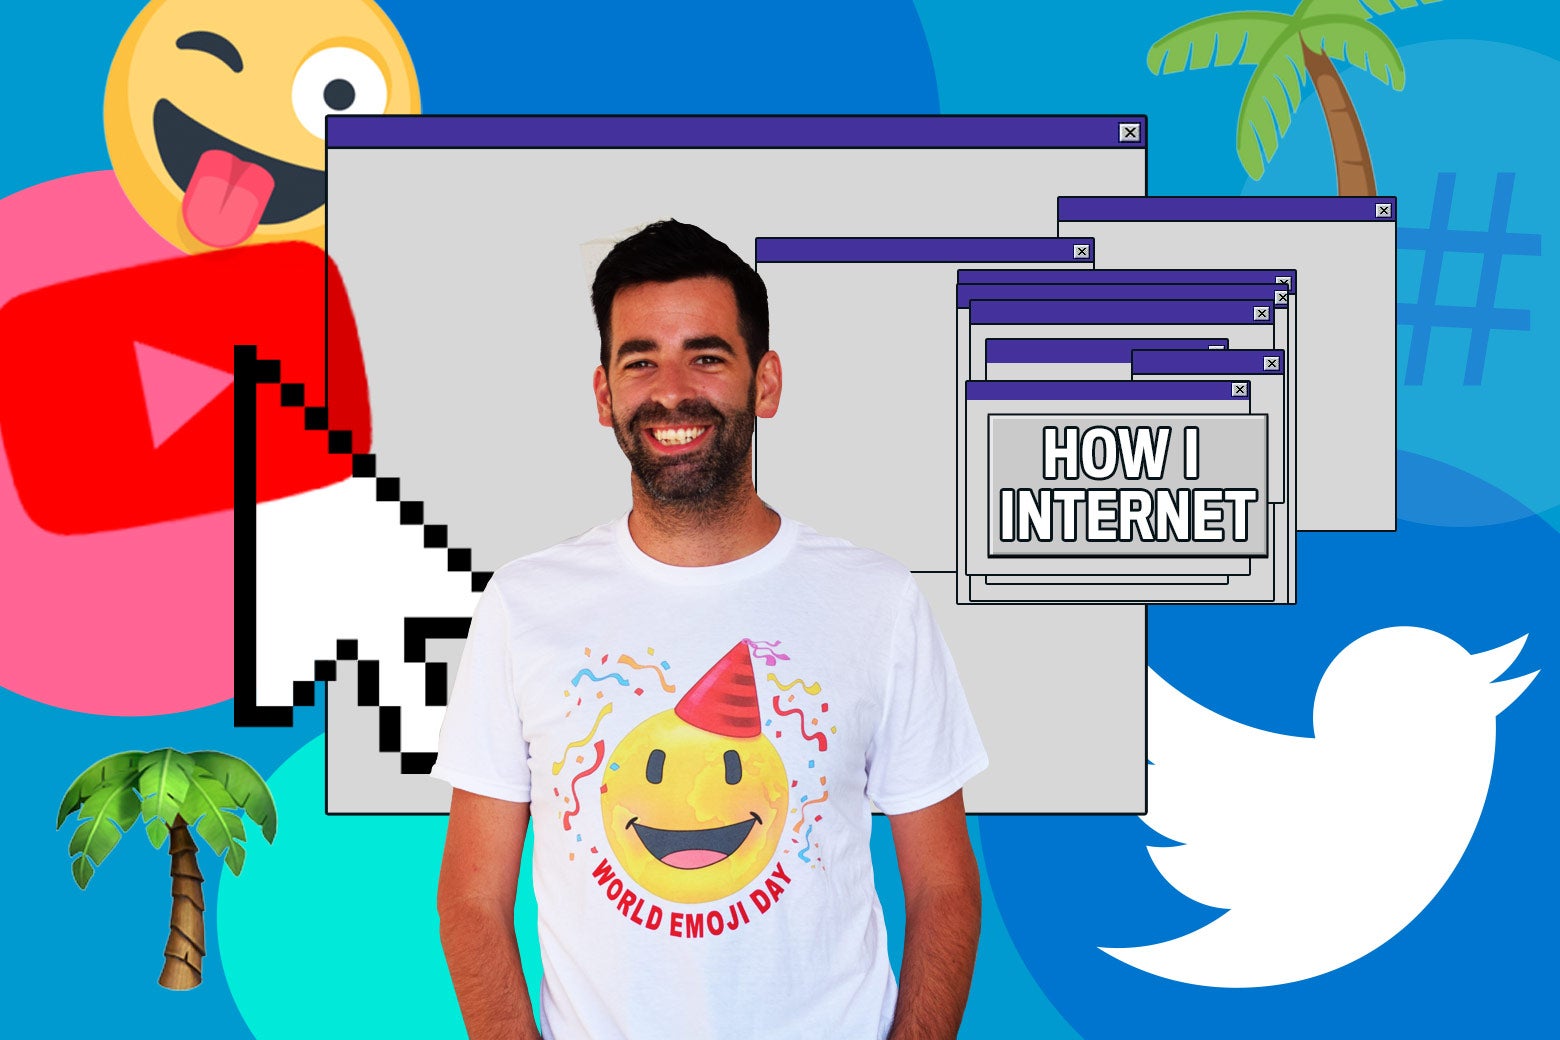 How Emojipedia founder Jeremy Burge uses the internet.